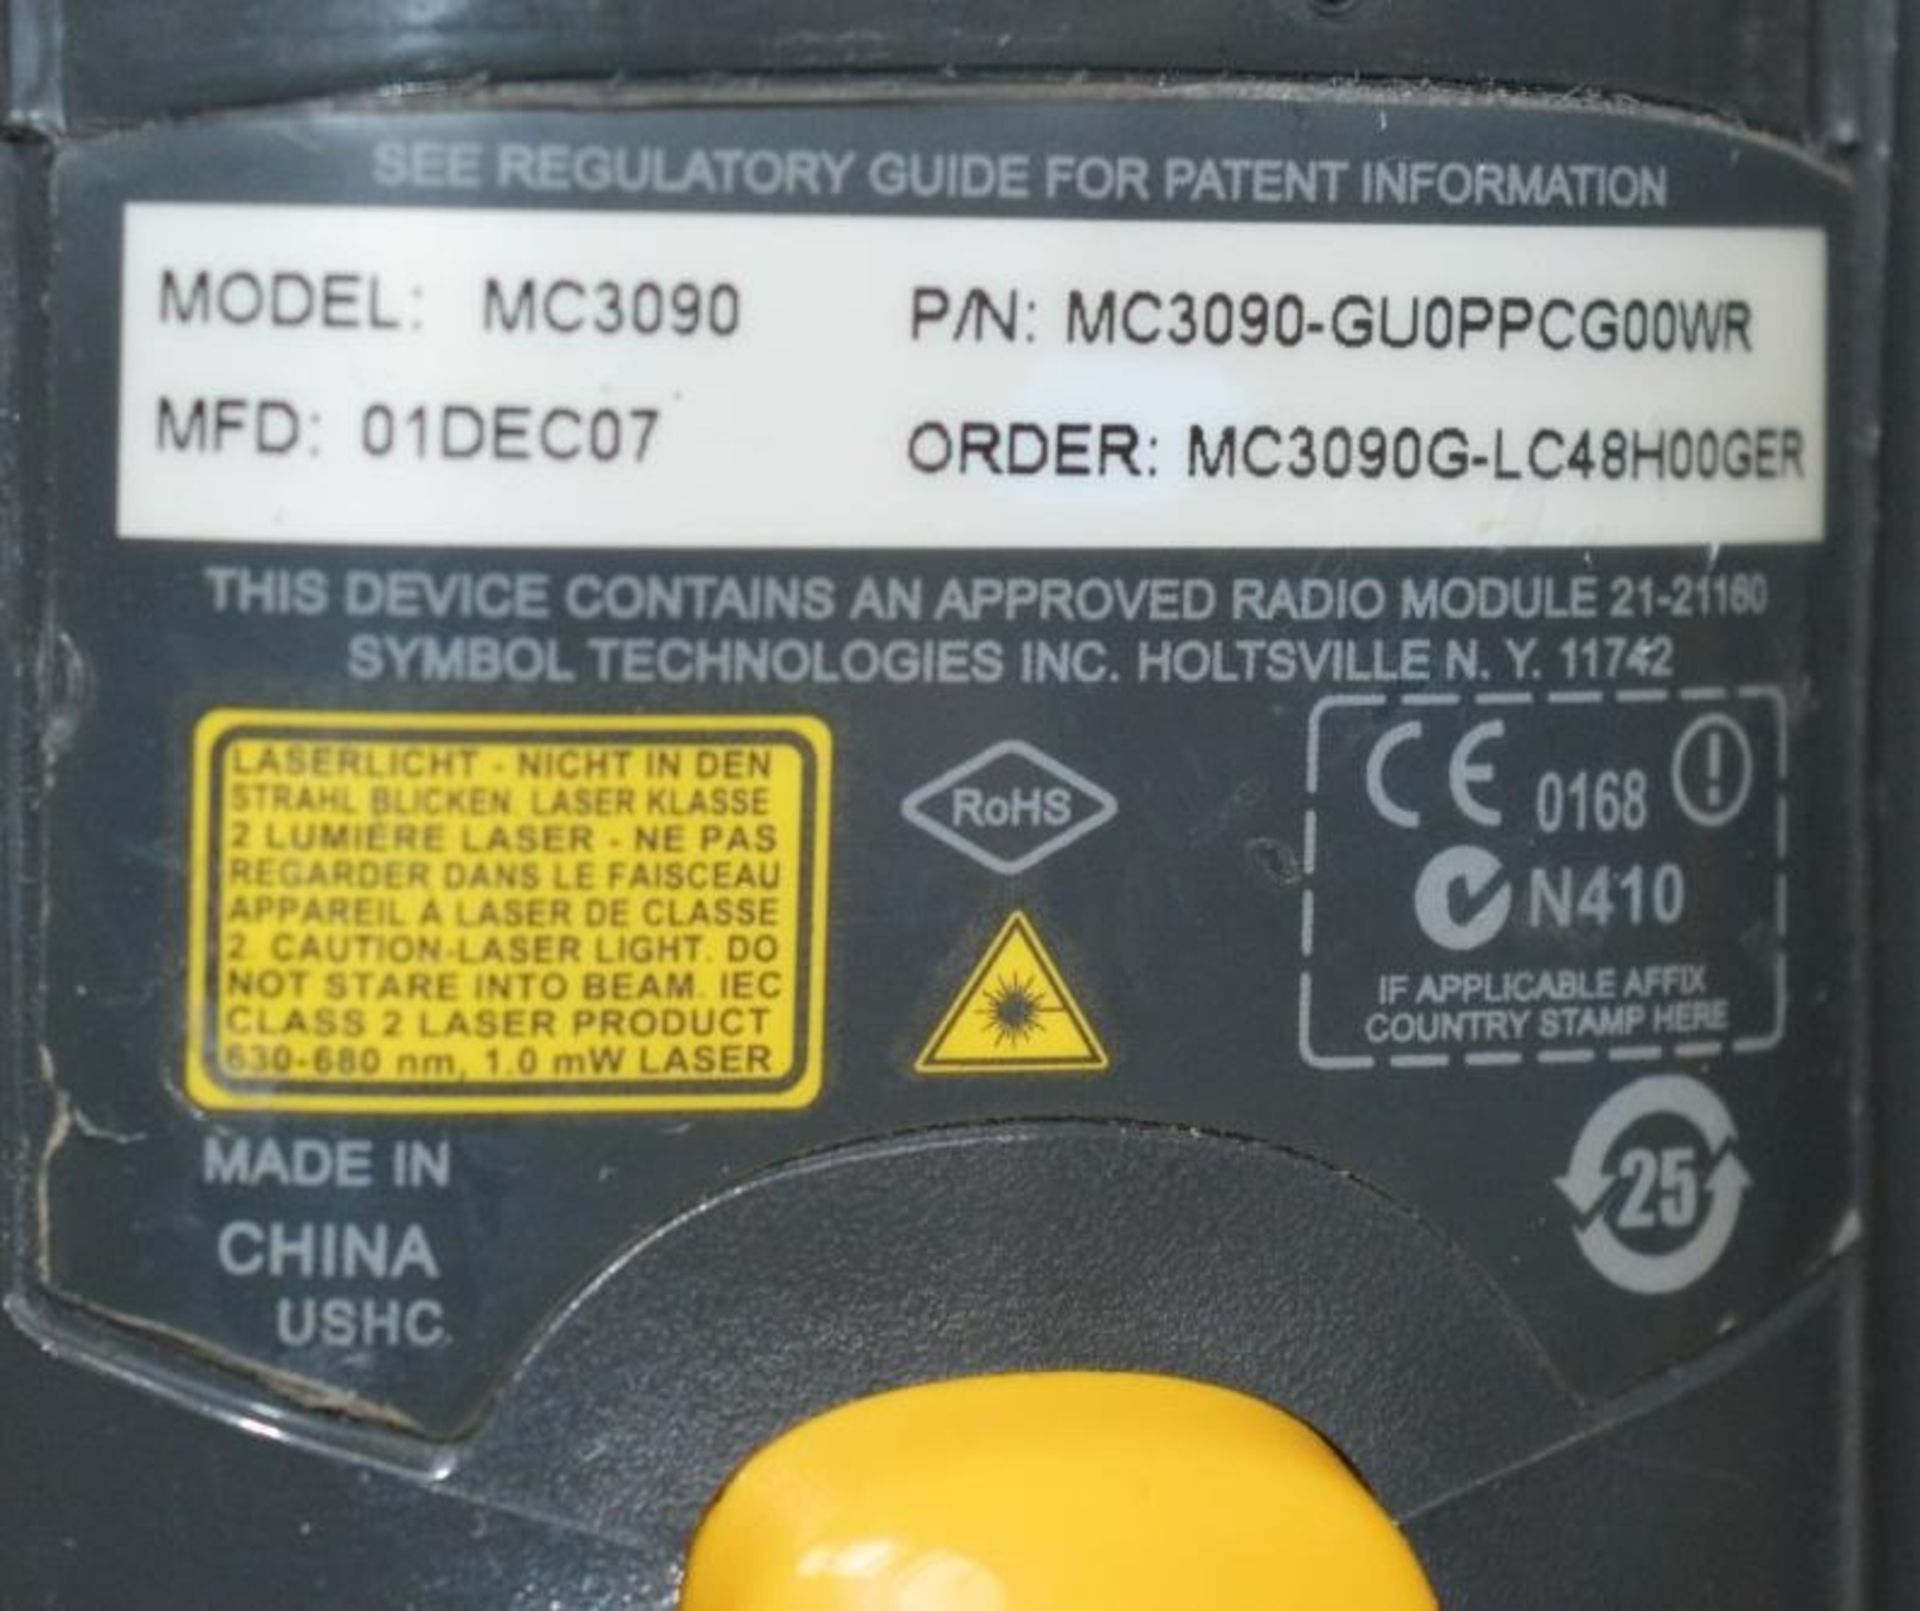 4 x Motorola Symbol MC3090 Handheld Barcode Scanners - Mobile Computer PDA - Includes Charging Dock, - Image 7 of 7